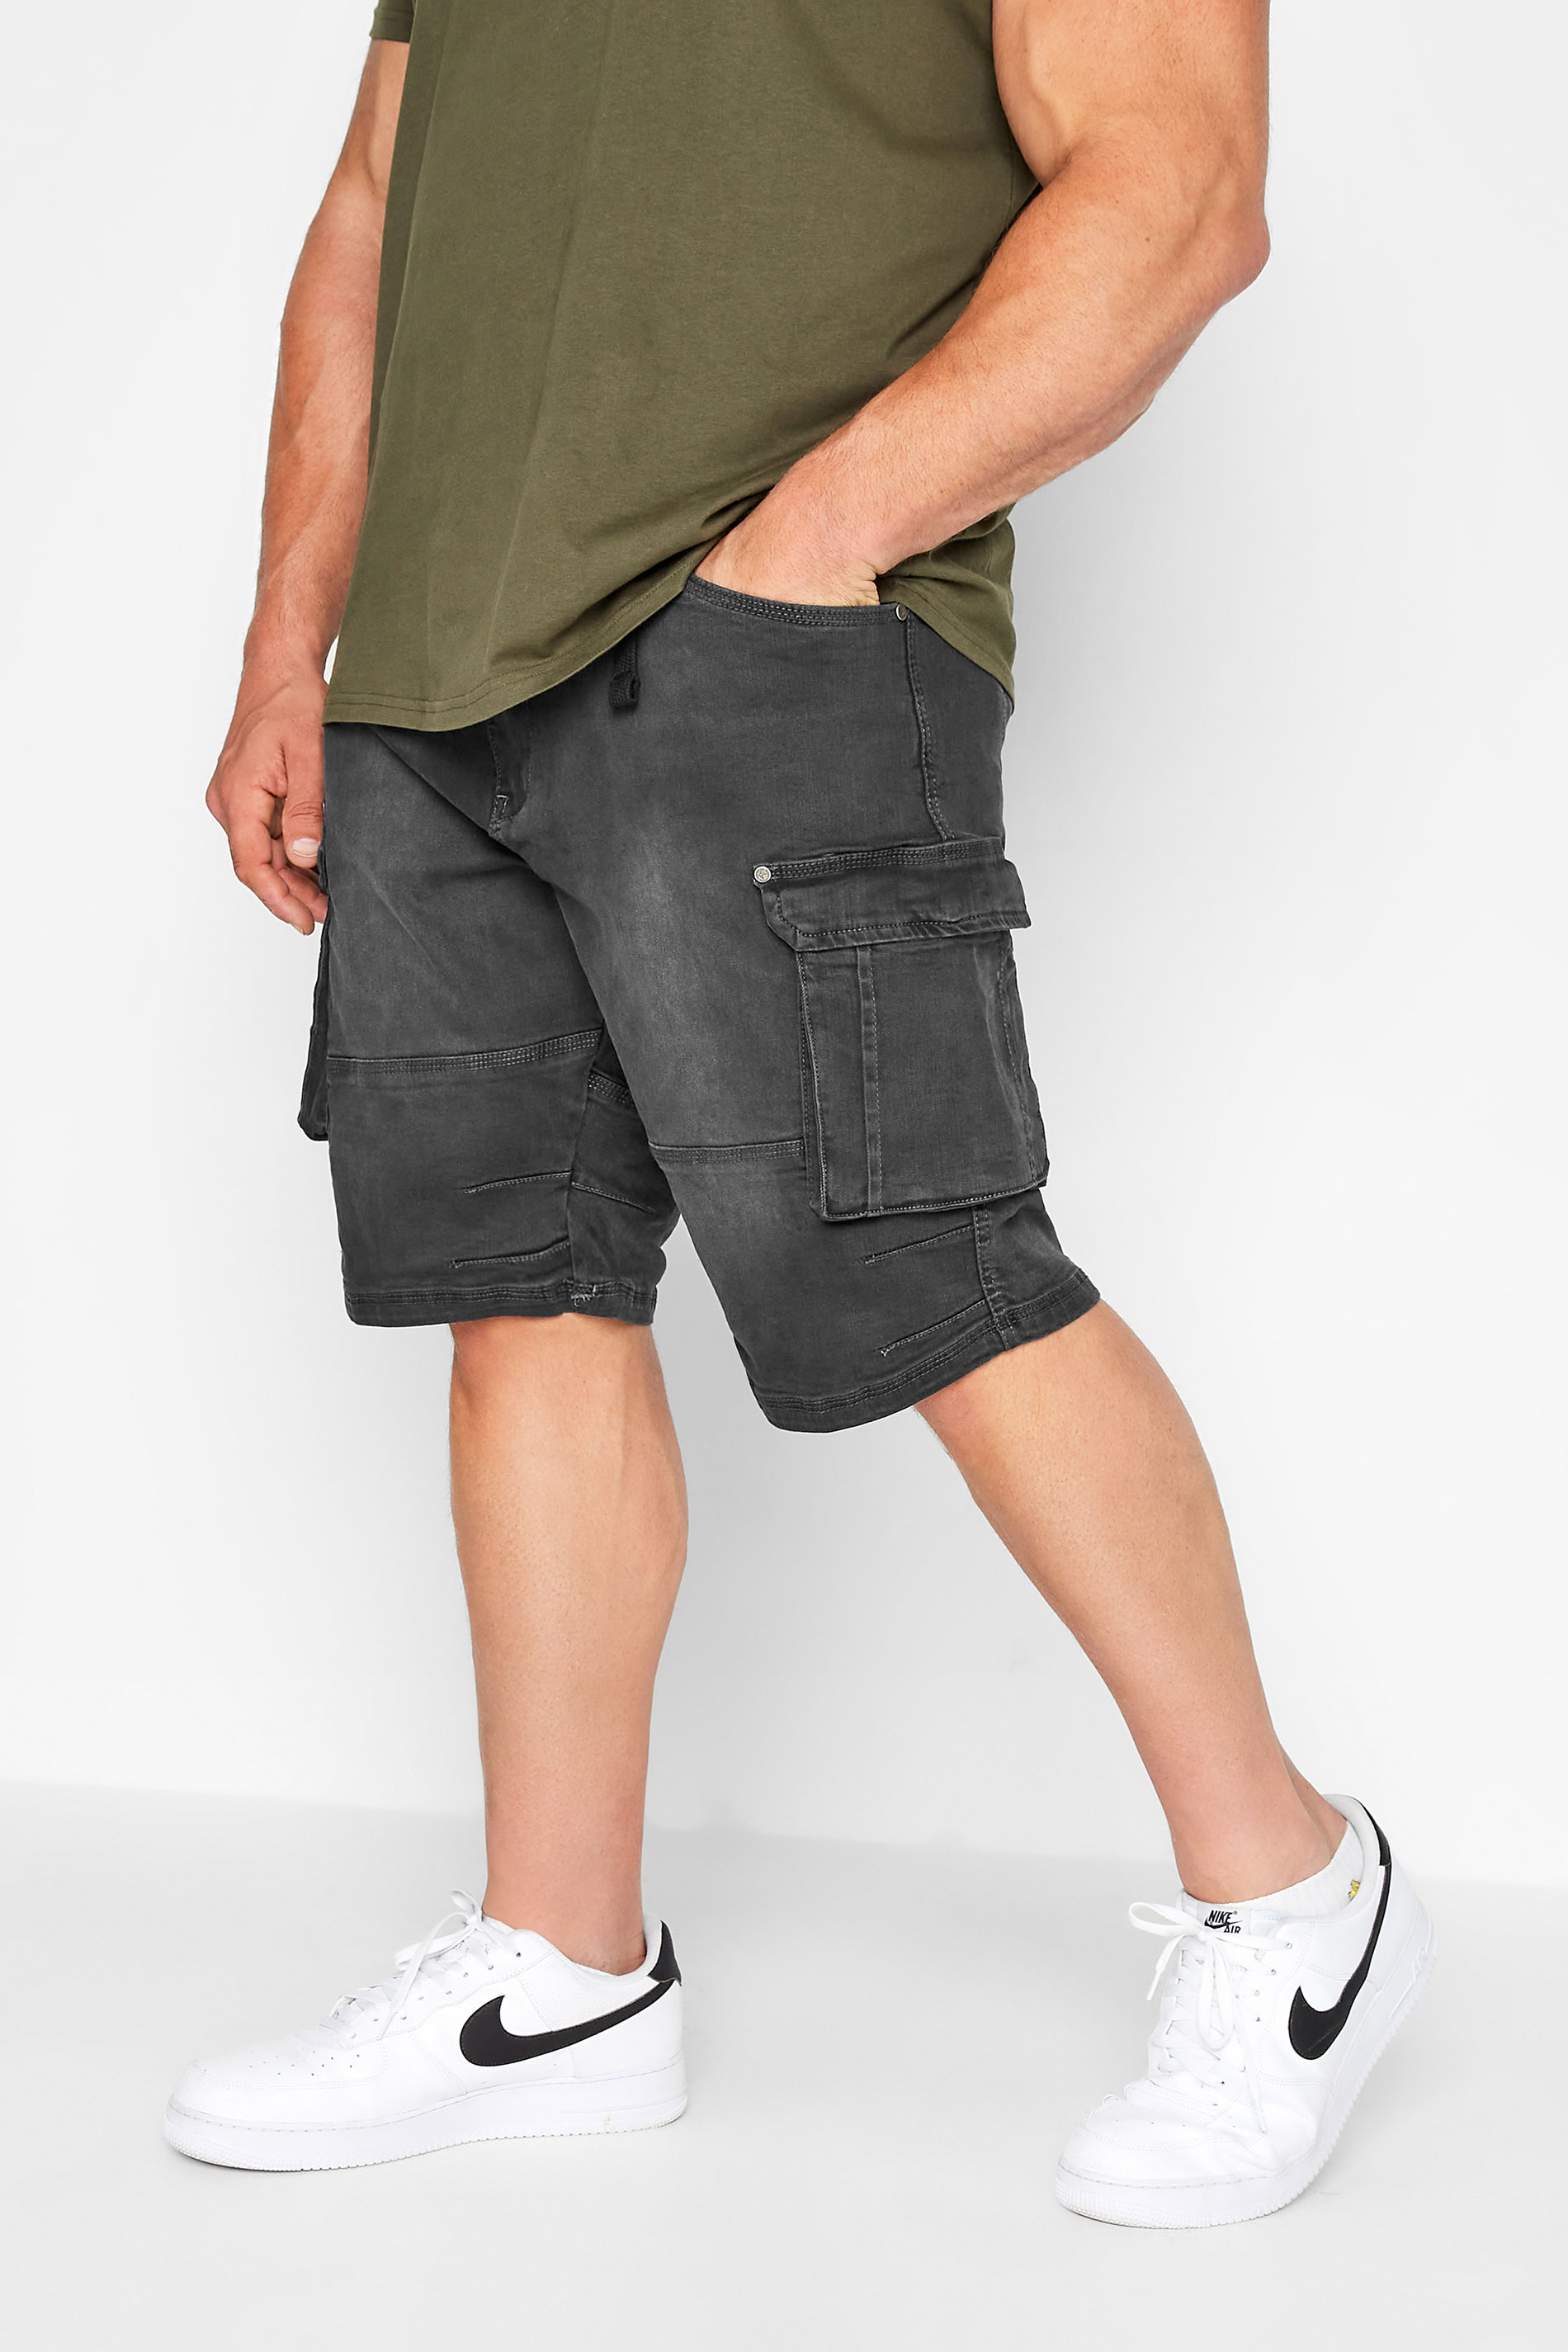 KAM Big & Tall Charcoal Grey Denim Shorts 1